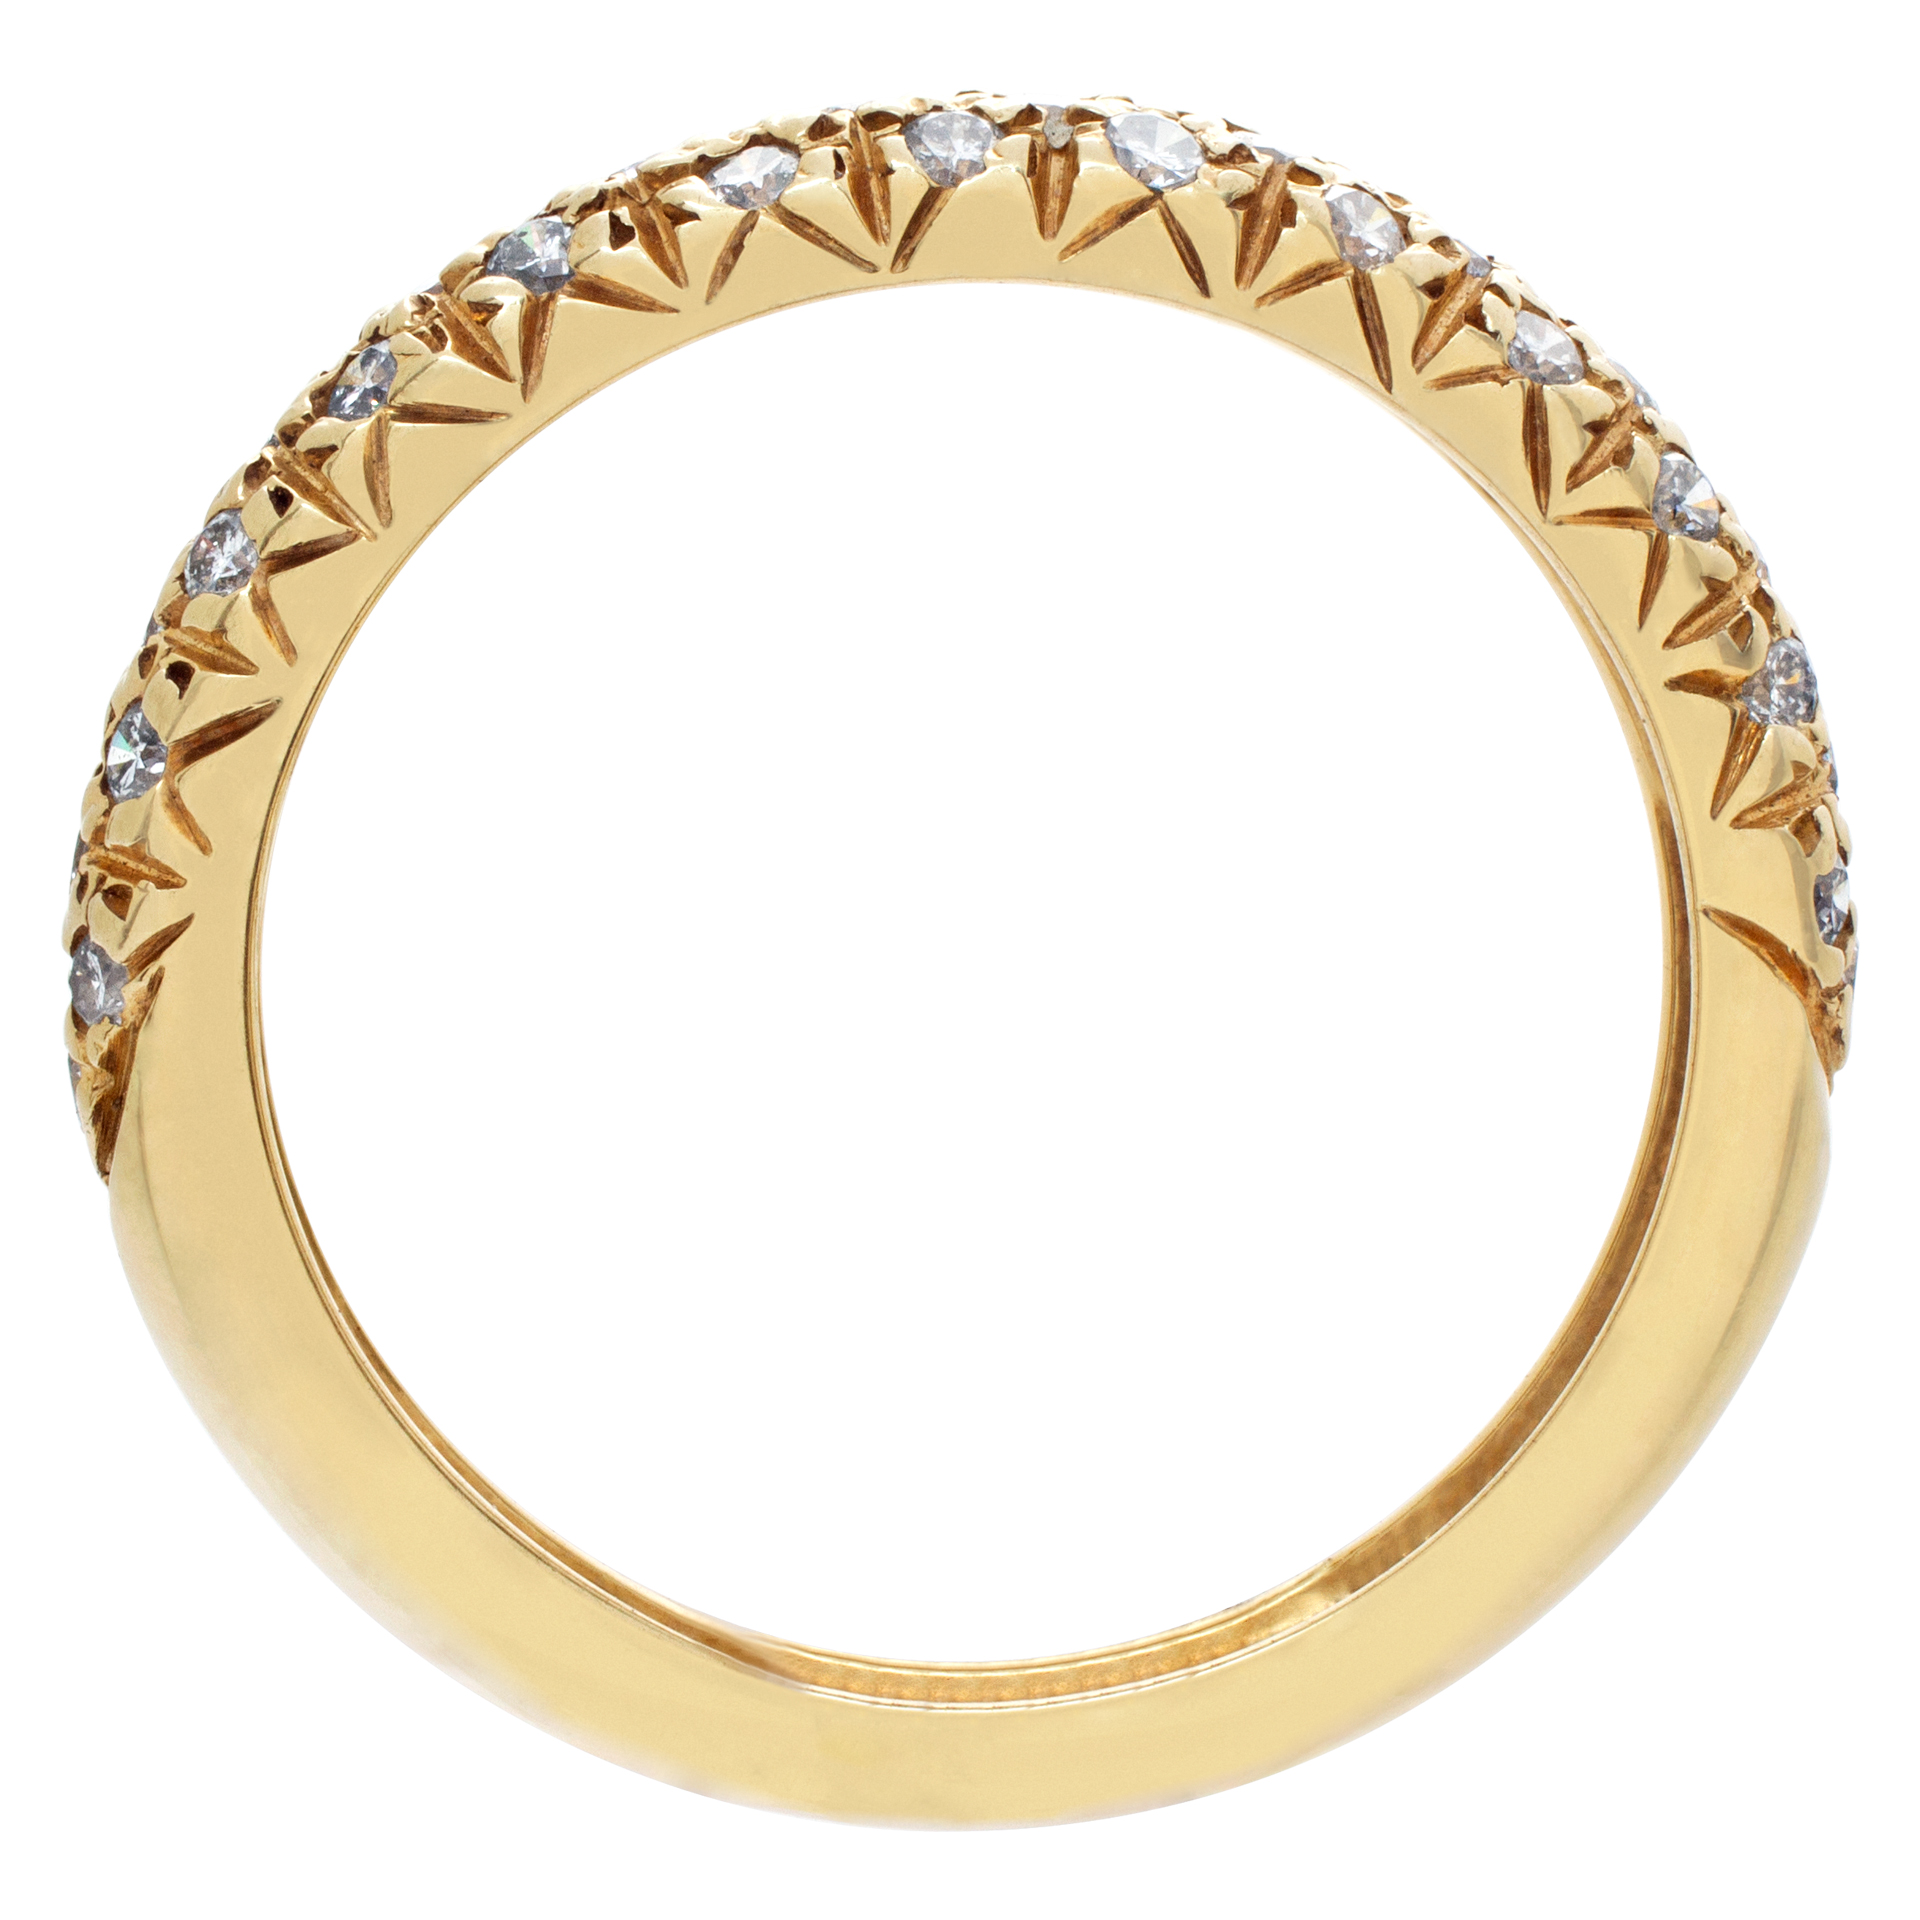 Precious pavé diamond band in 14k yellow gold. 0.80 carats in diamonds. Size 6 image 4